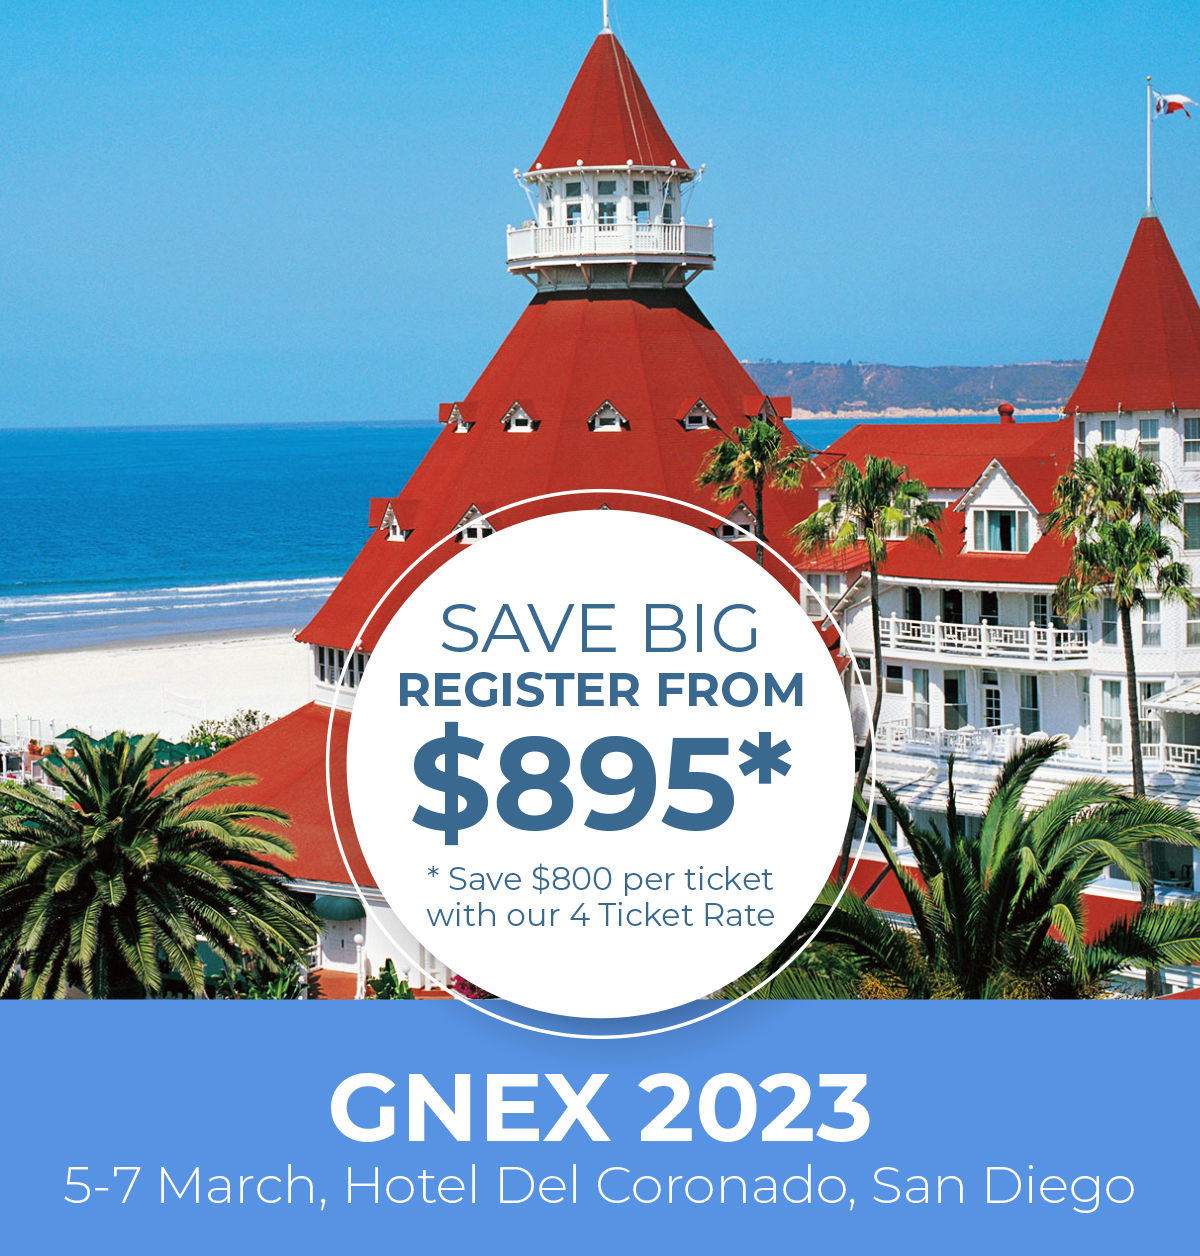 GNEX 2023 Conference